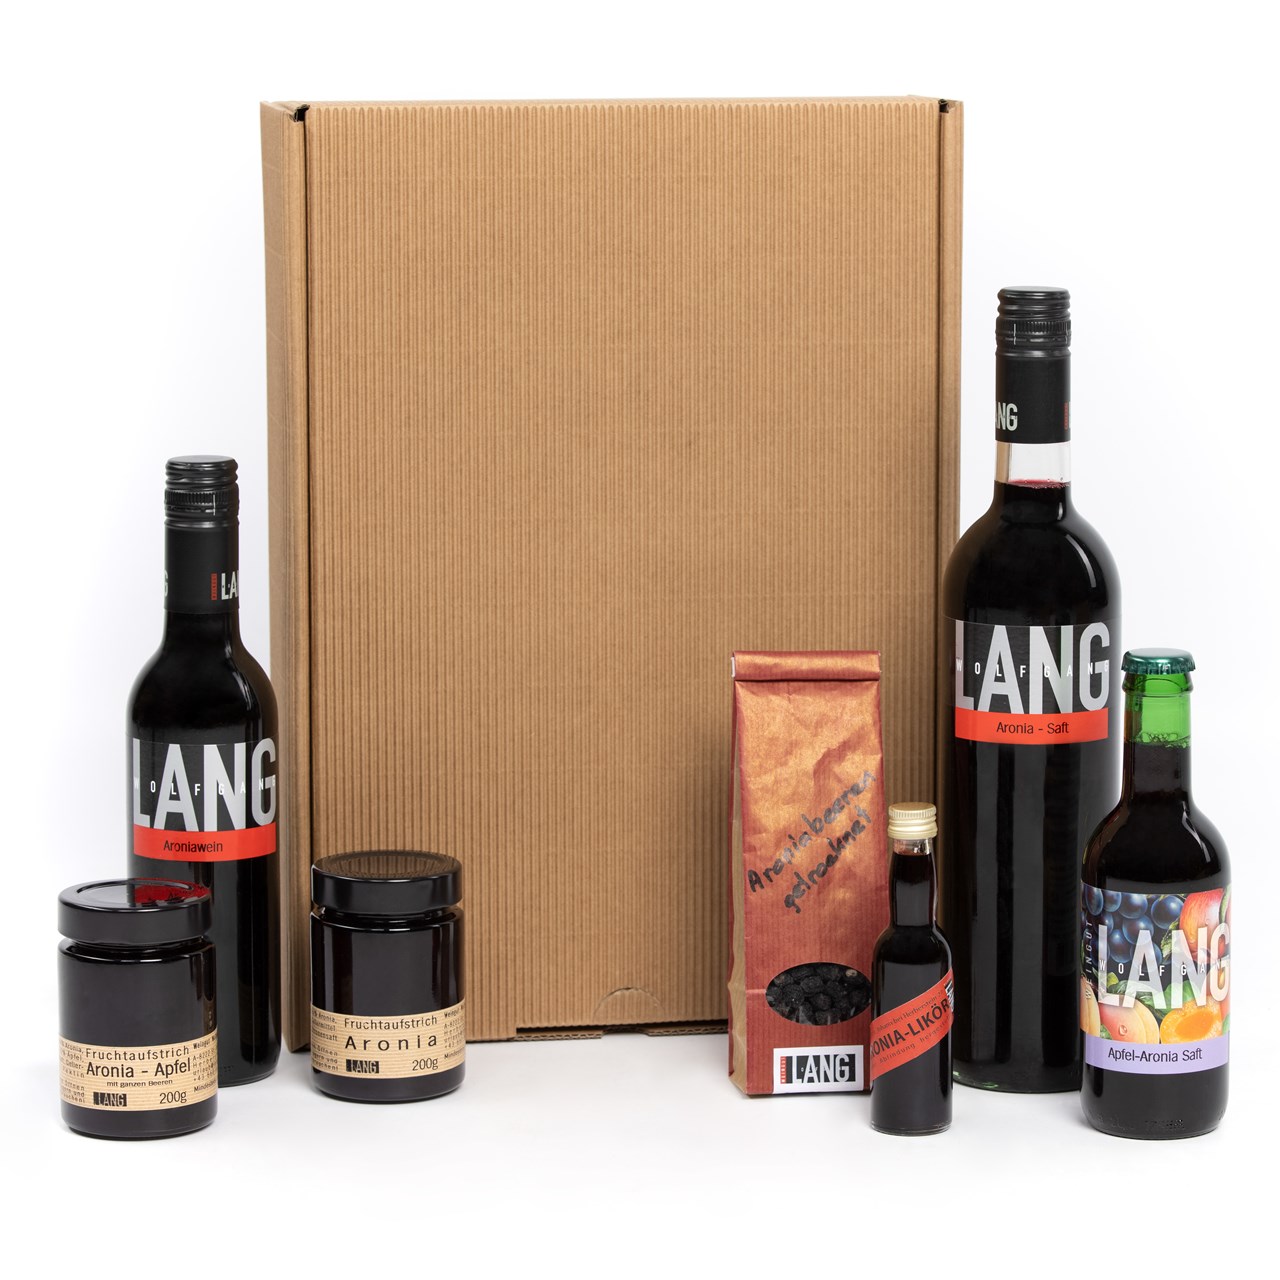 Weingut Wolfgang Lang Produkt-Beispiele Aroniaprodukte